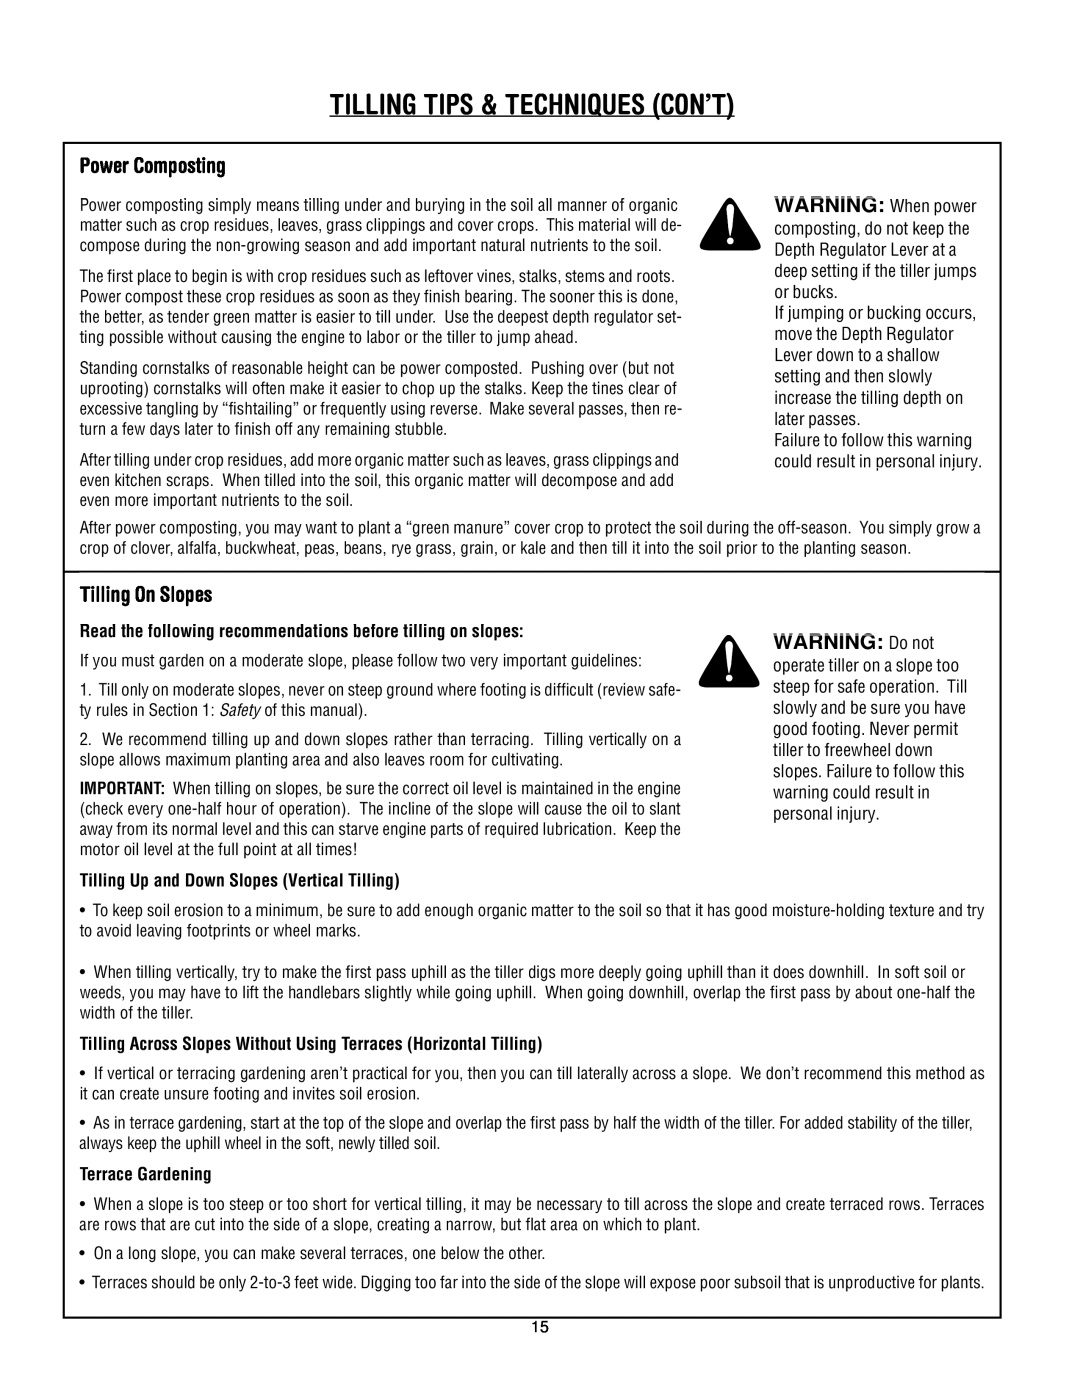 Troy-Bilt 630C-Tuffy manual Tilling Tips & Techniques Con’T, Power Composting, Tilling On Slopes, WARNING Do not 